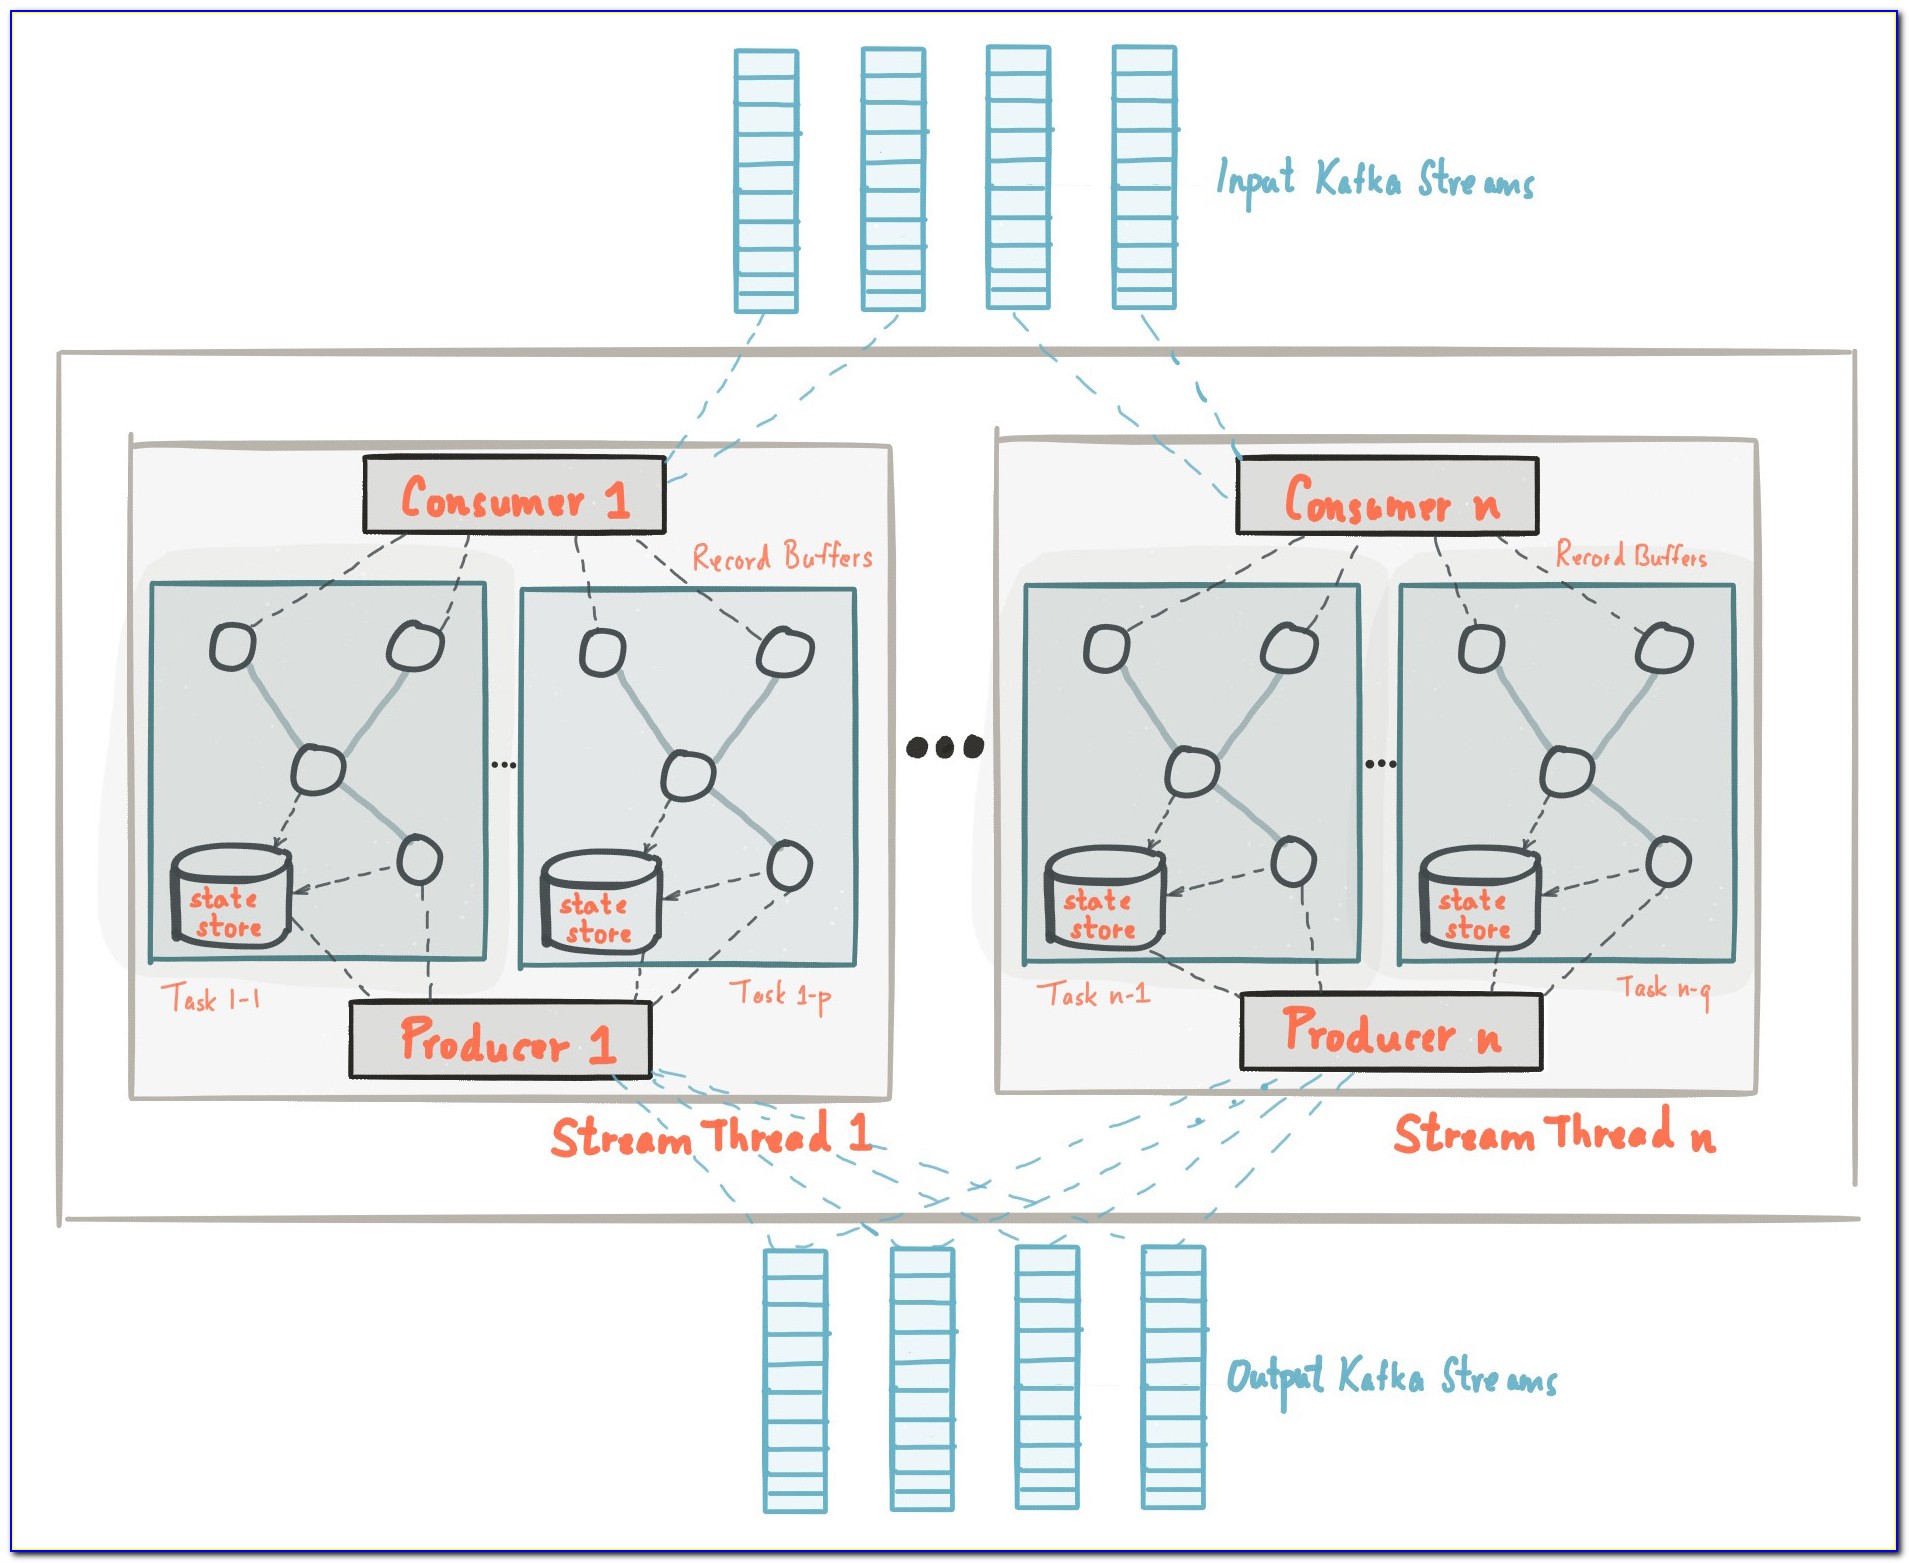 Apache Kafka Cluster Architecture Diagram